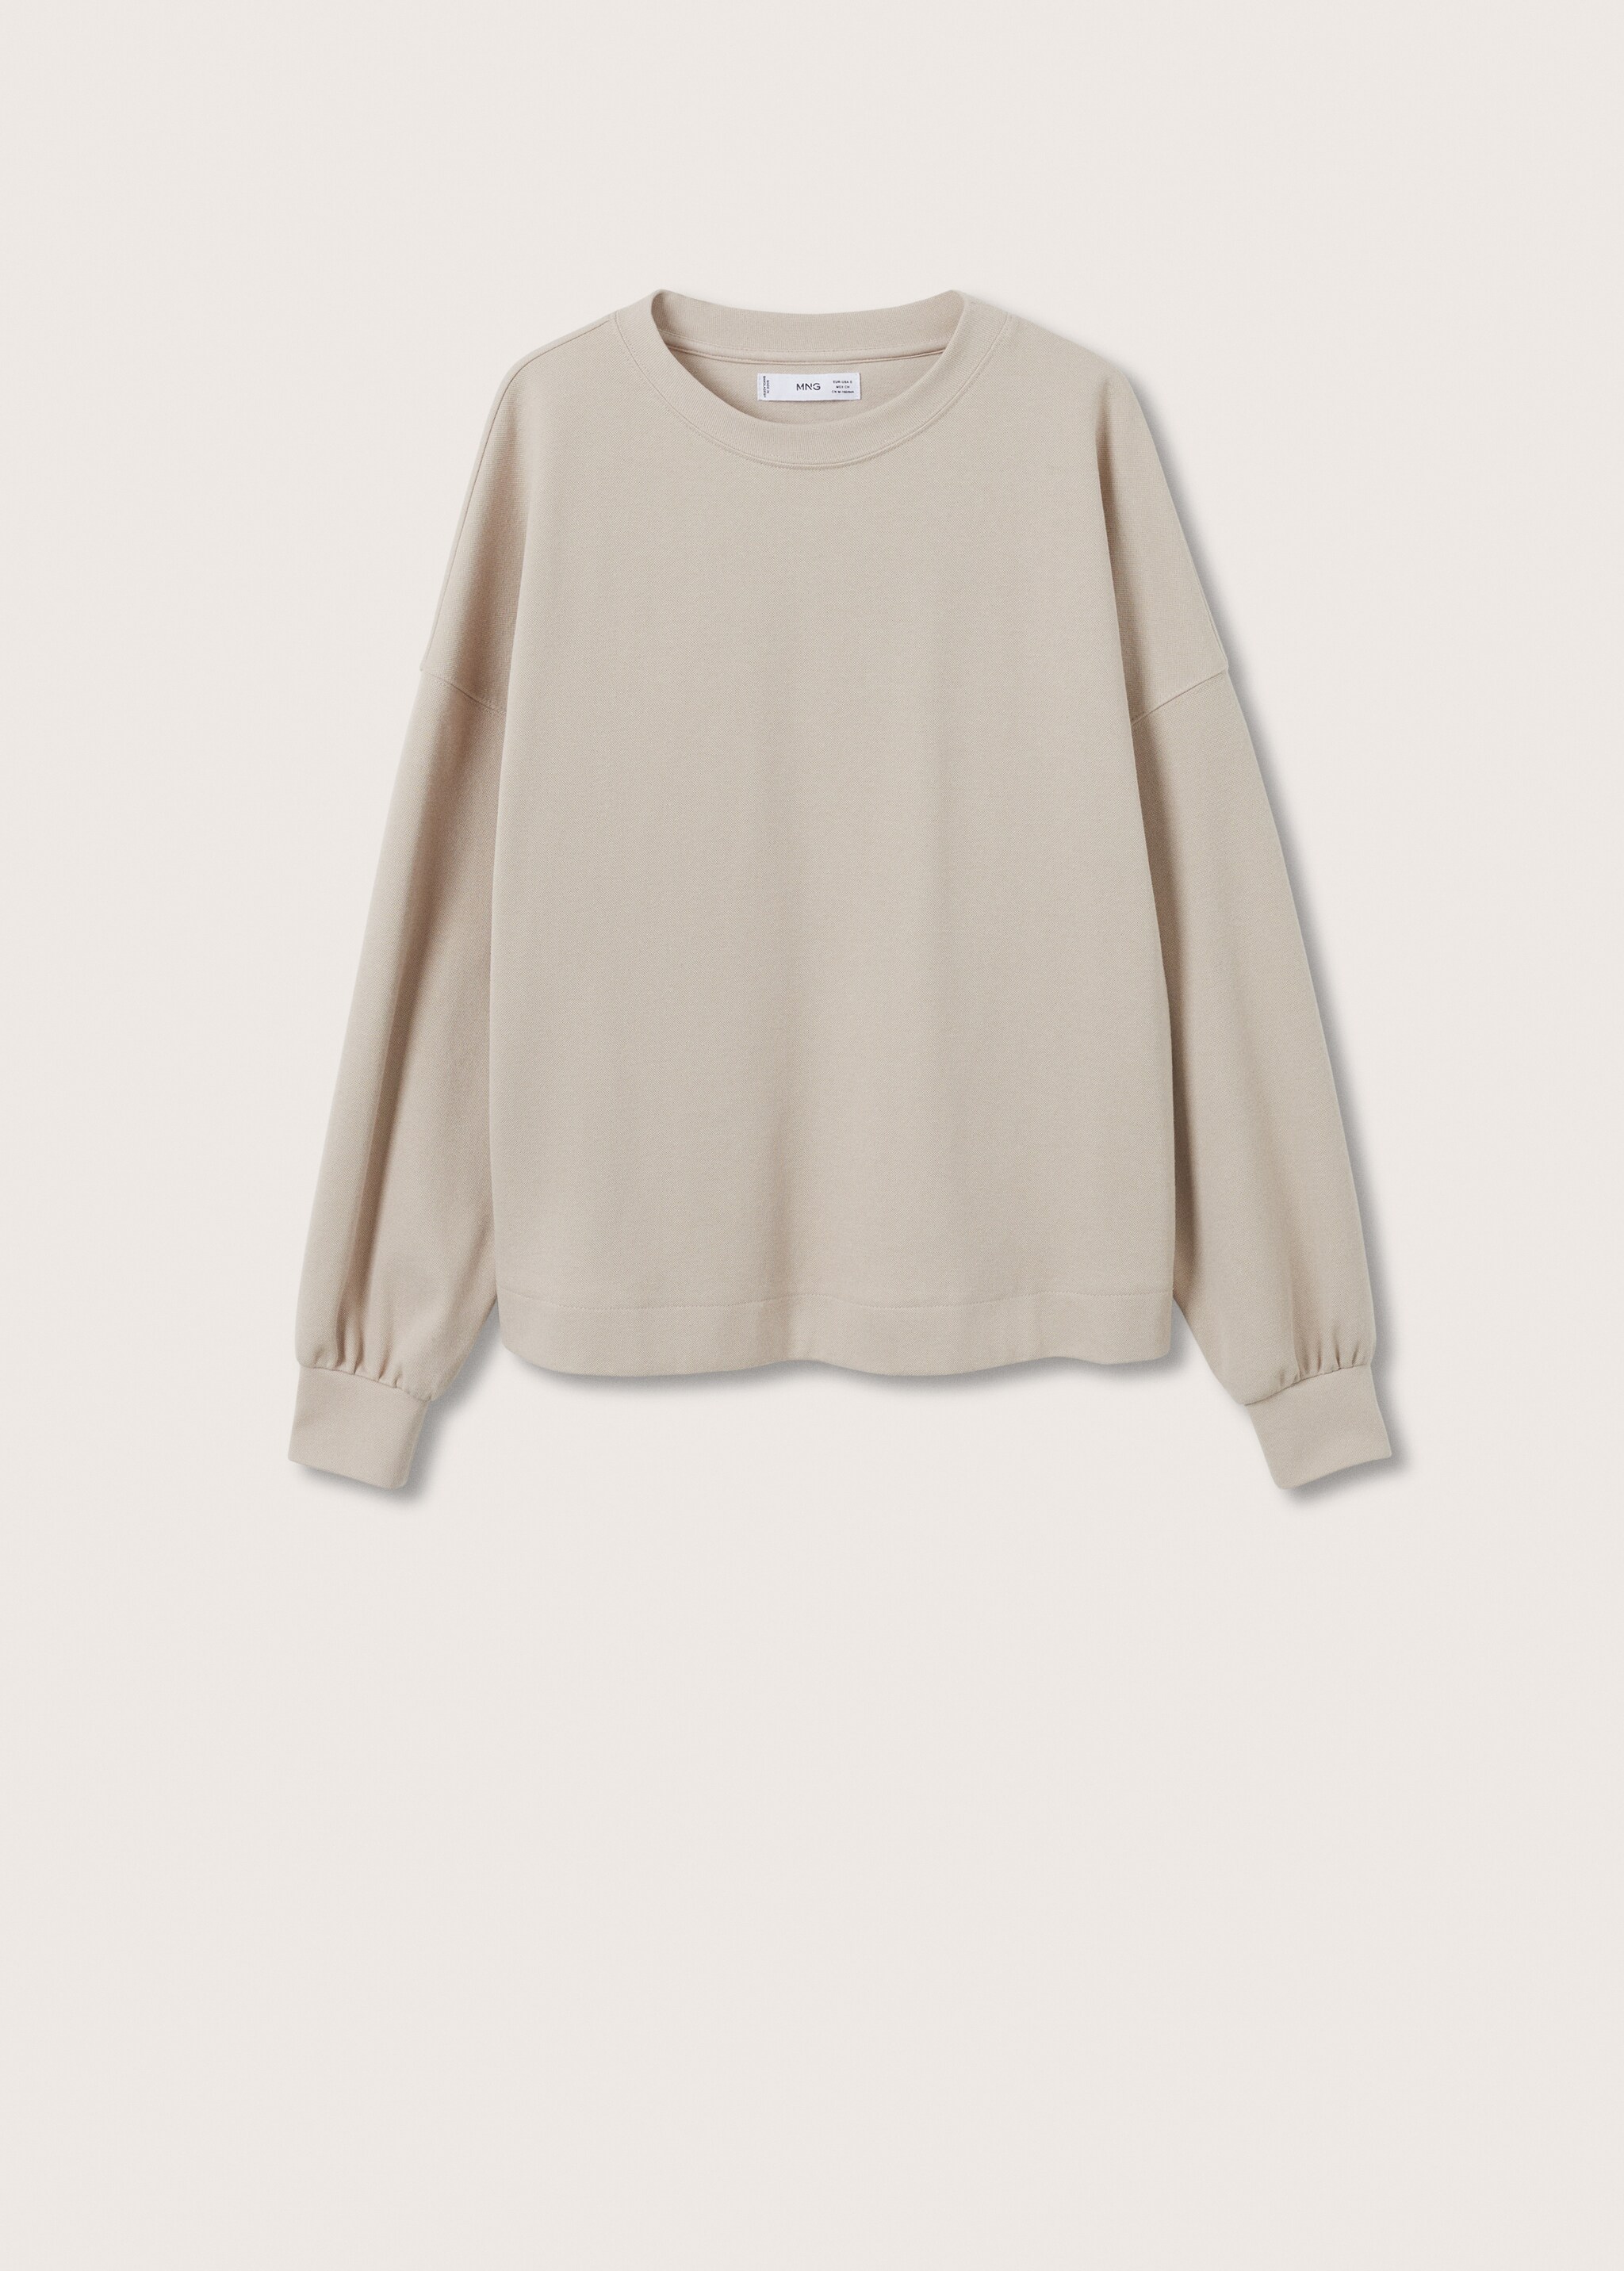 Oversize cotton sweatshirt - Article without model